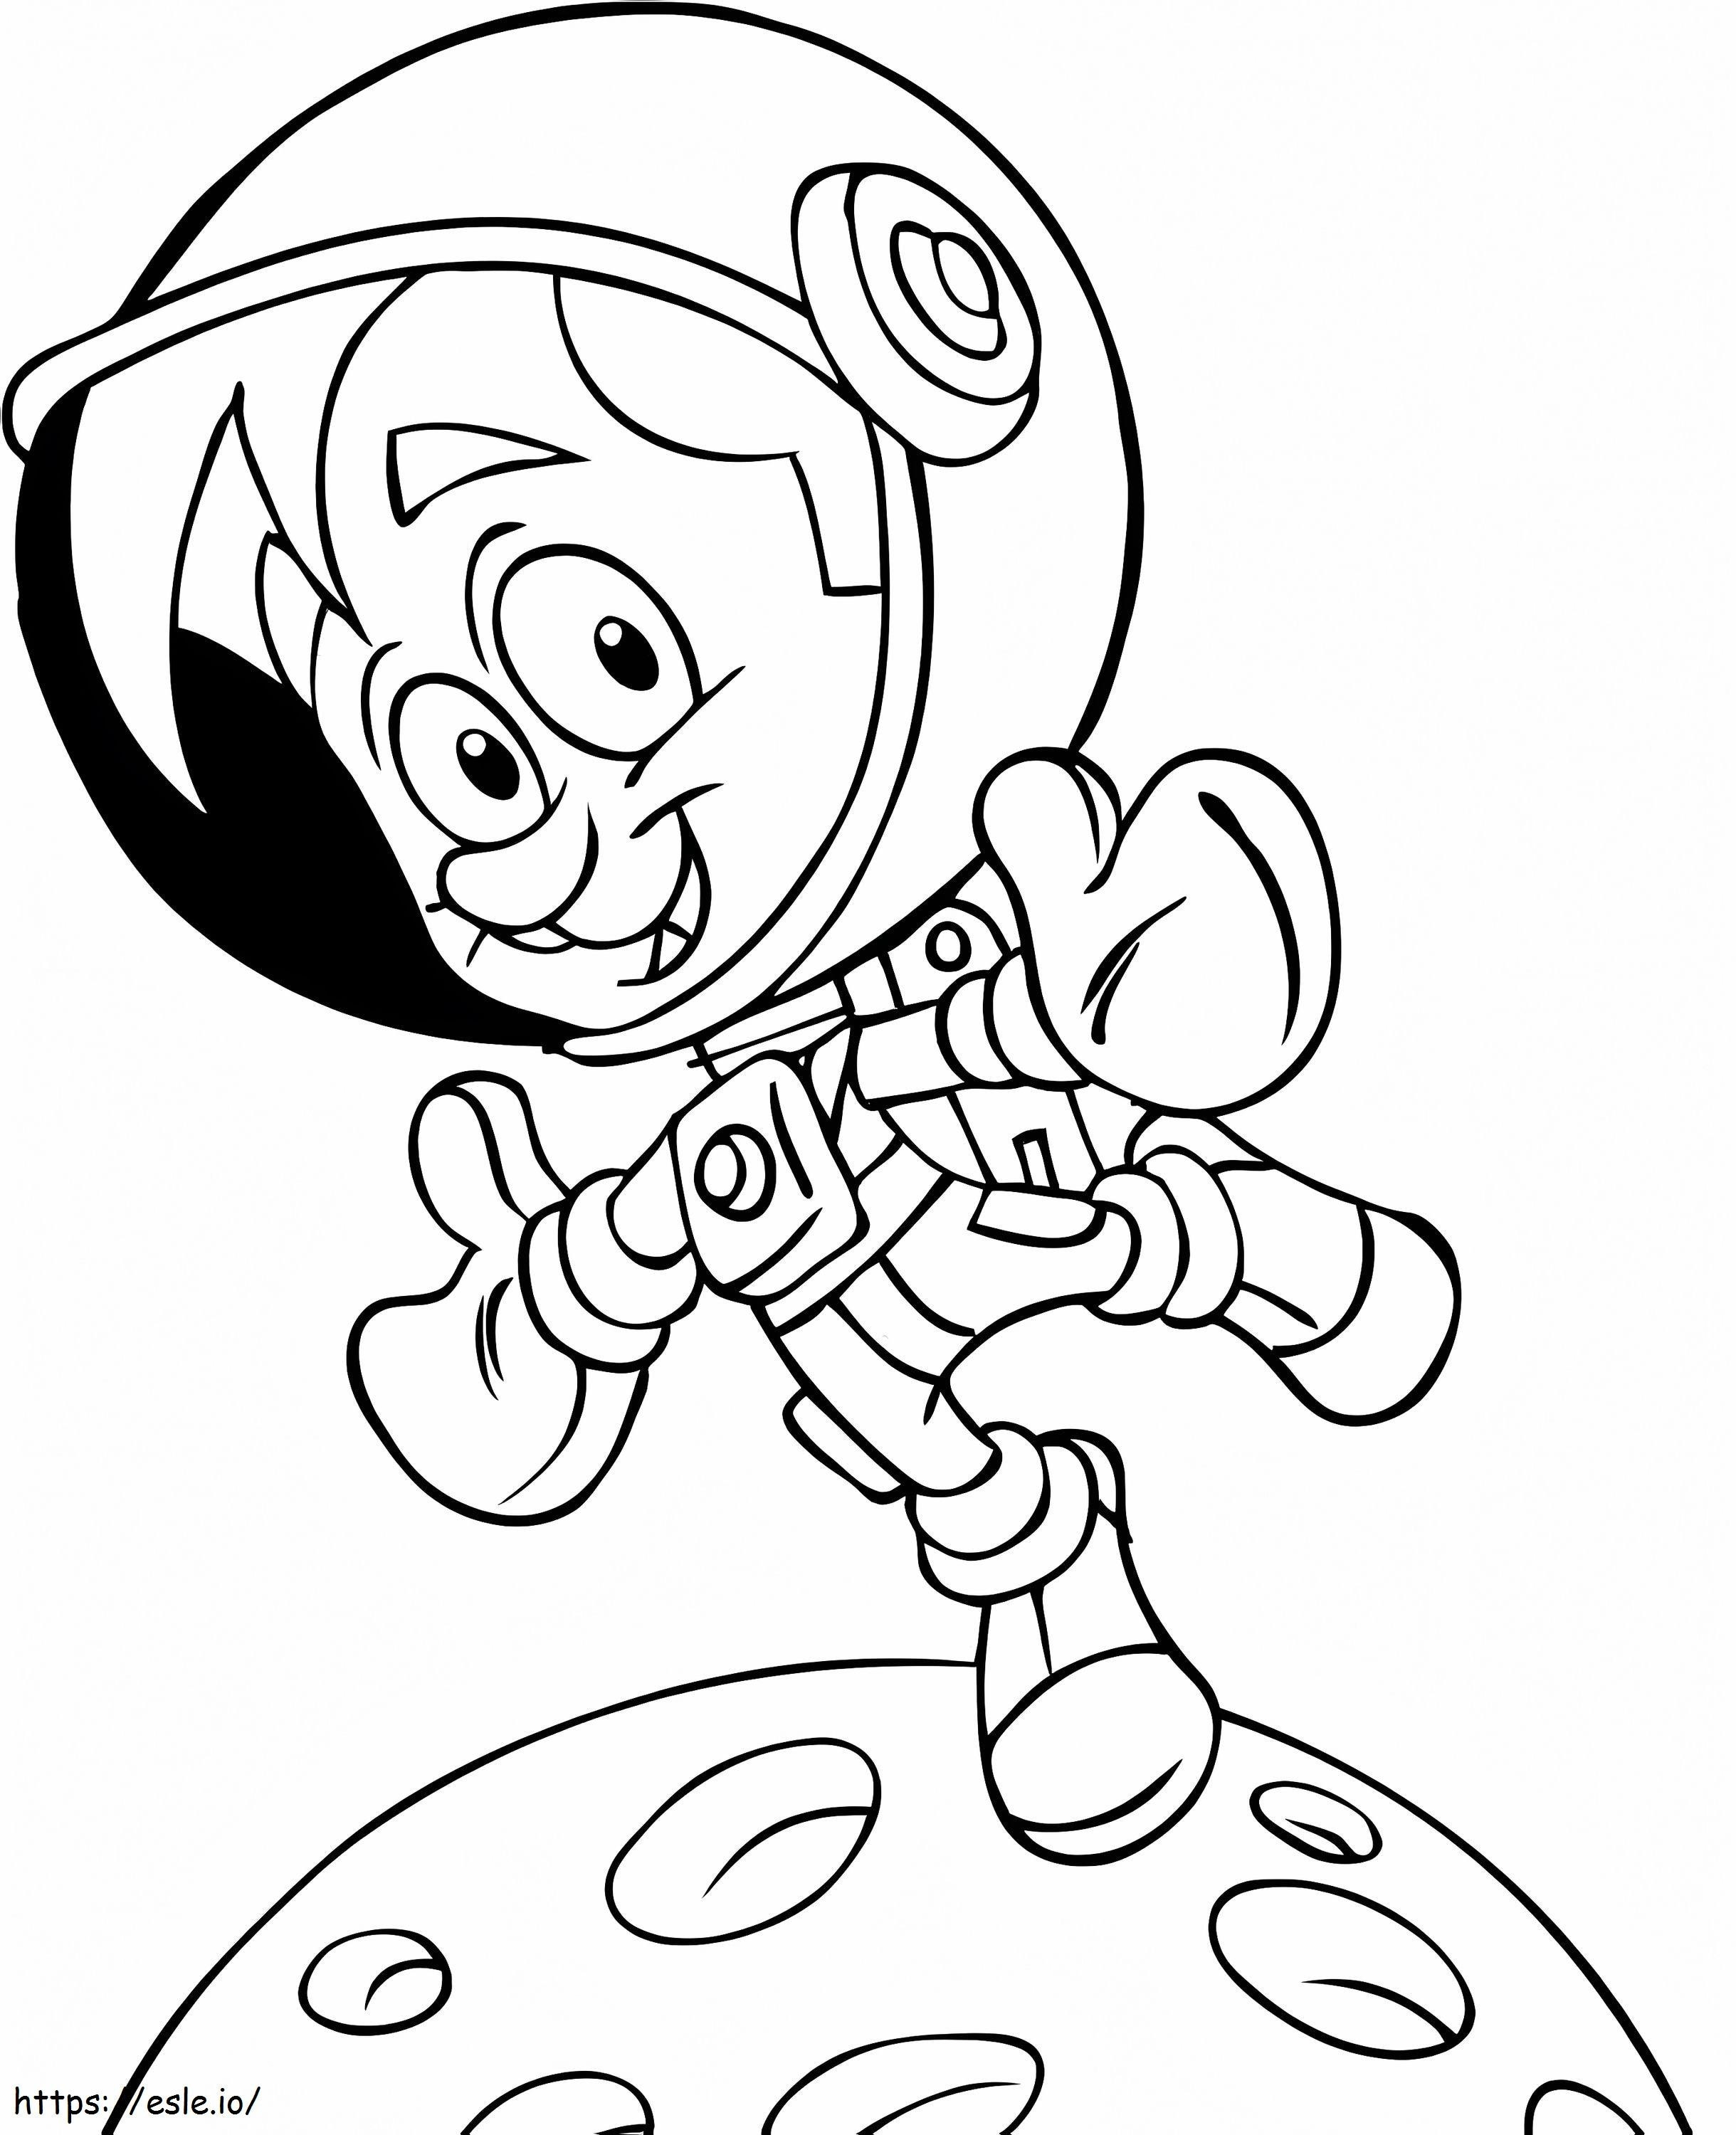 Astronauta de desenho animado para colorir